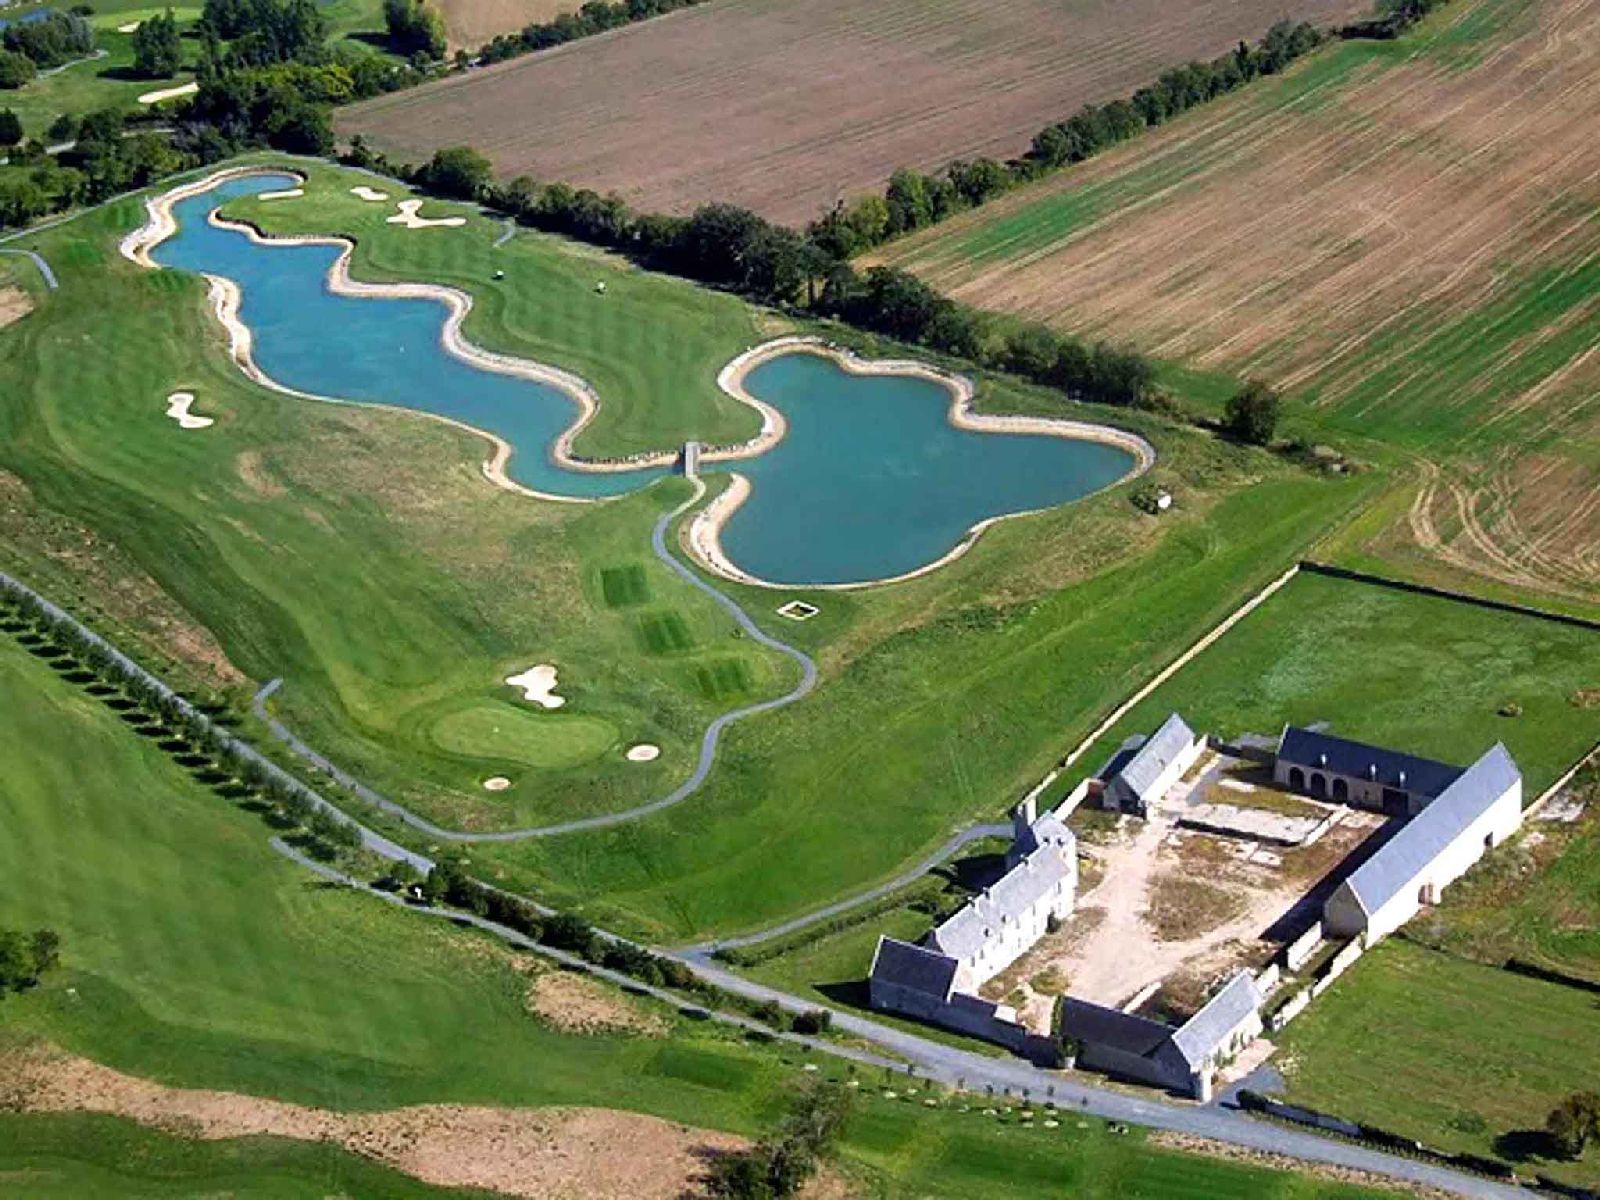 golf-expedition-golf-reizen-frankrijk-regio-normandië-hotel-mercure-omaha-beach-drone-accommodatie-golfbaan-water-hazard.jpg